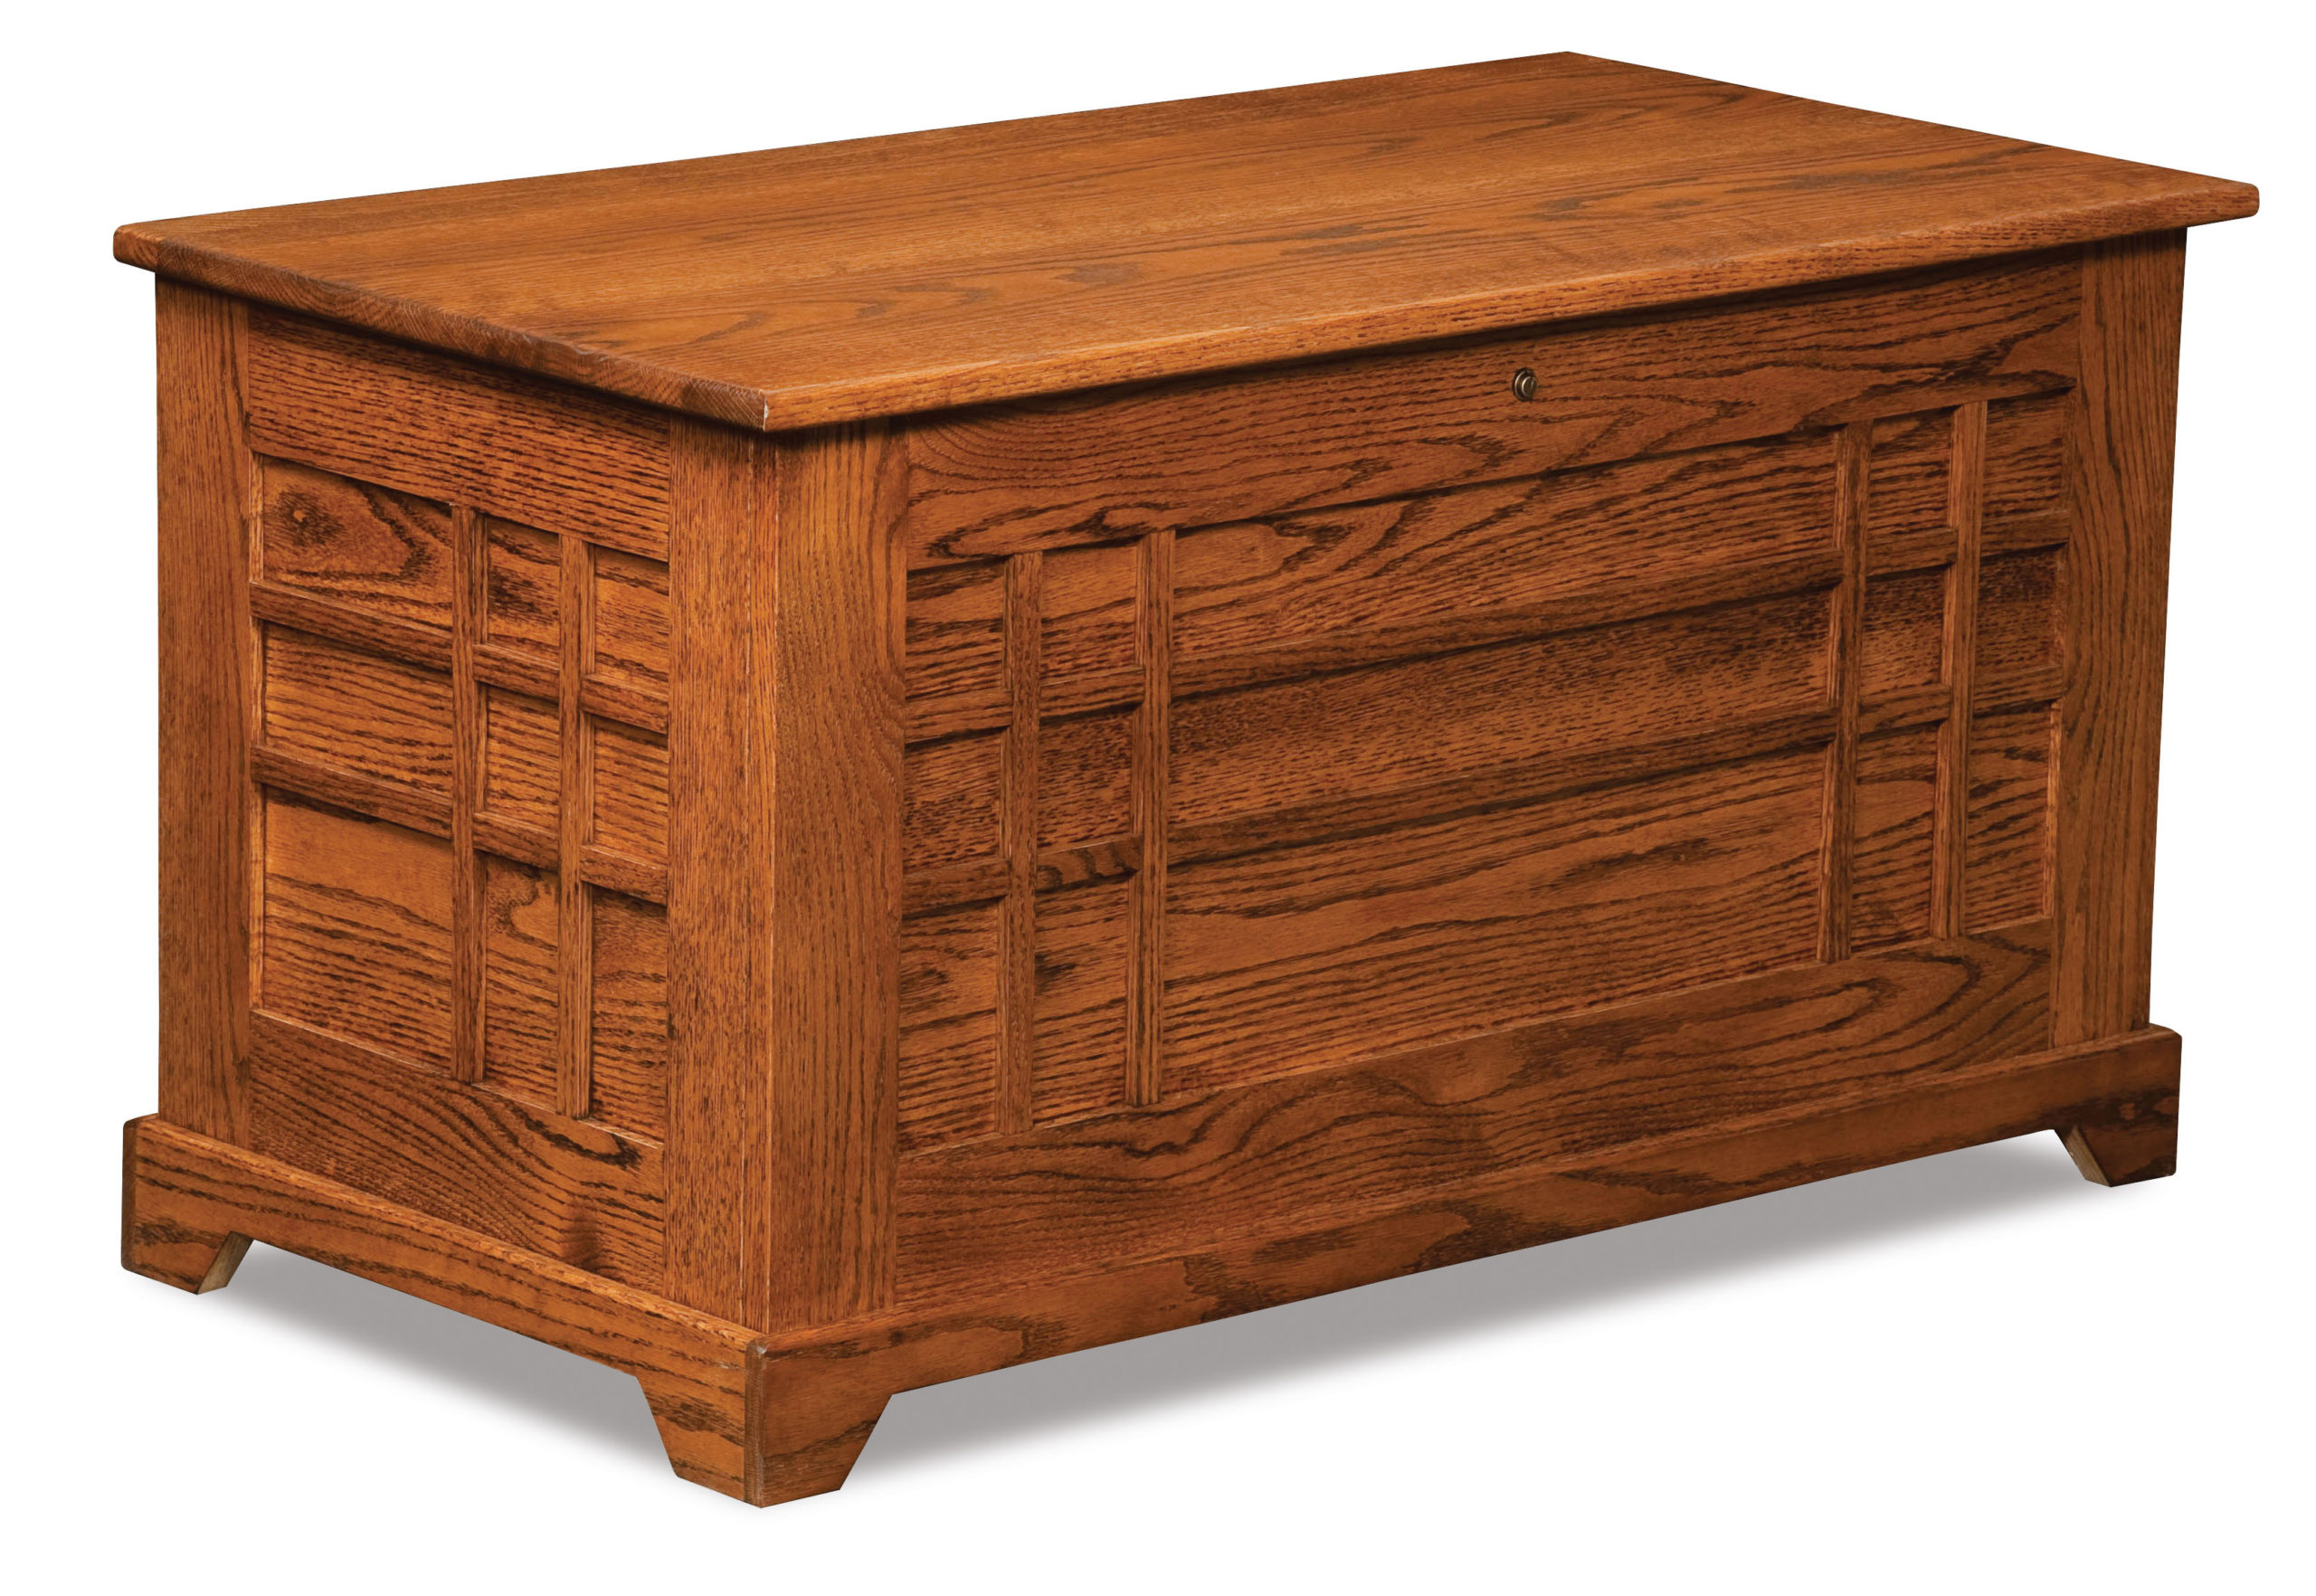 wooden chest for living room